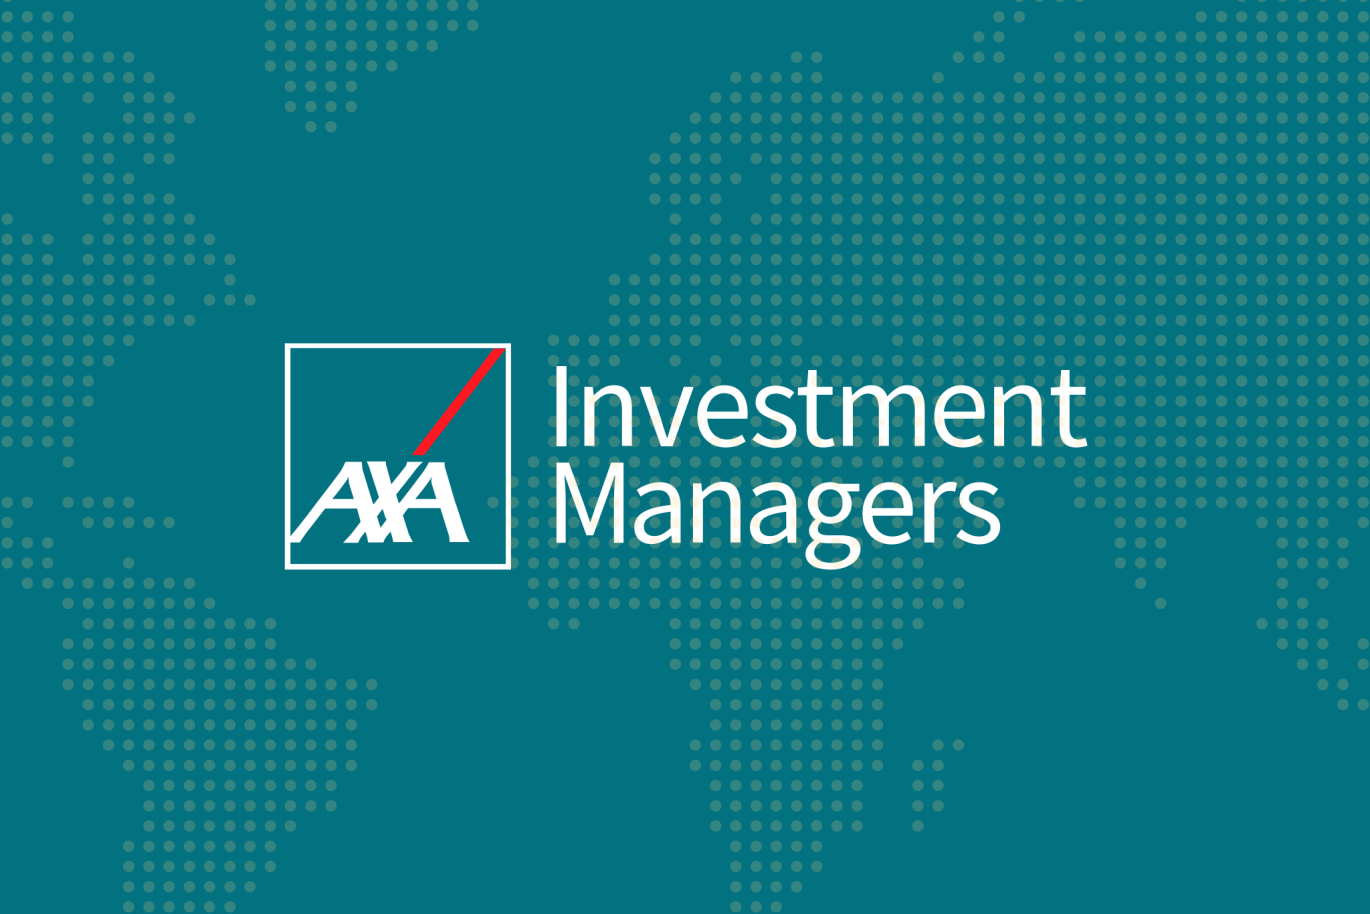 Showcasing AXA as a leader in ESG investing